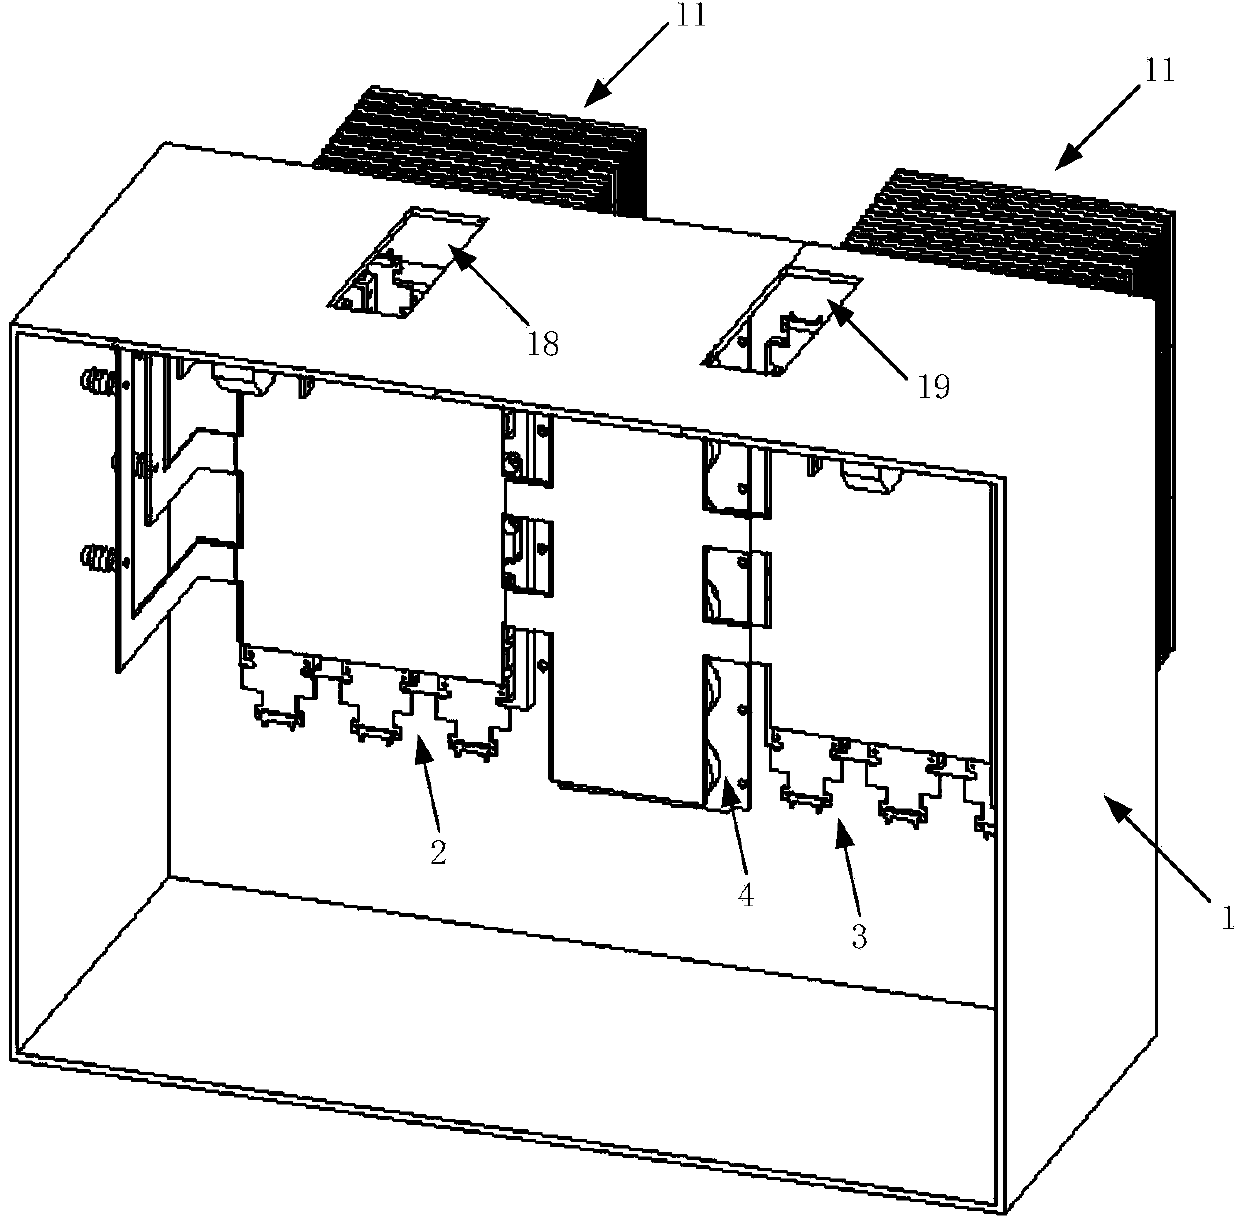 Three-level IGBT power cabinet based on heat pipe radiator